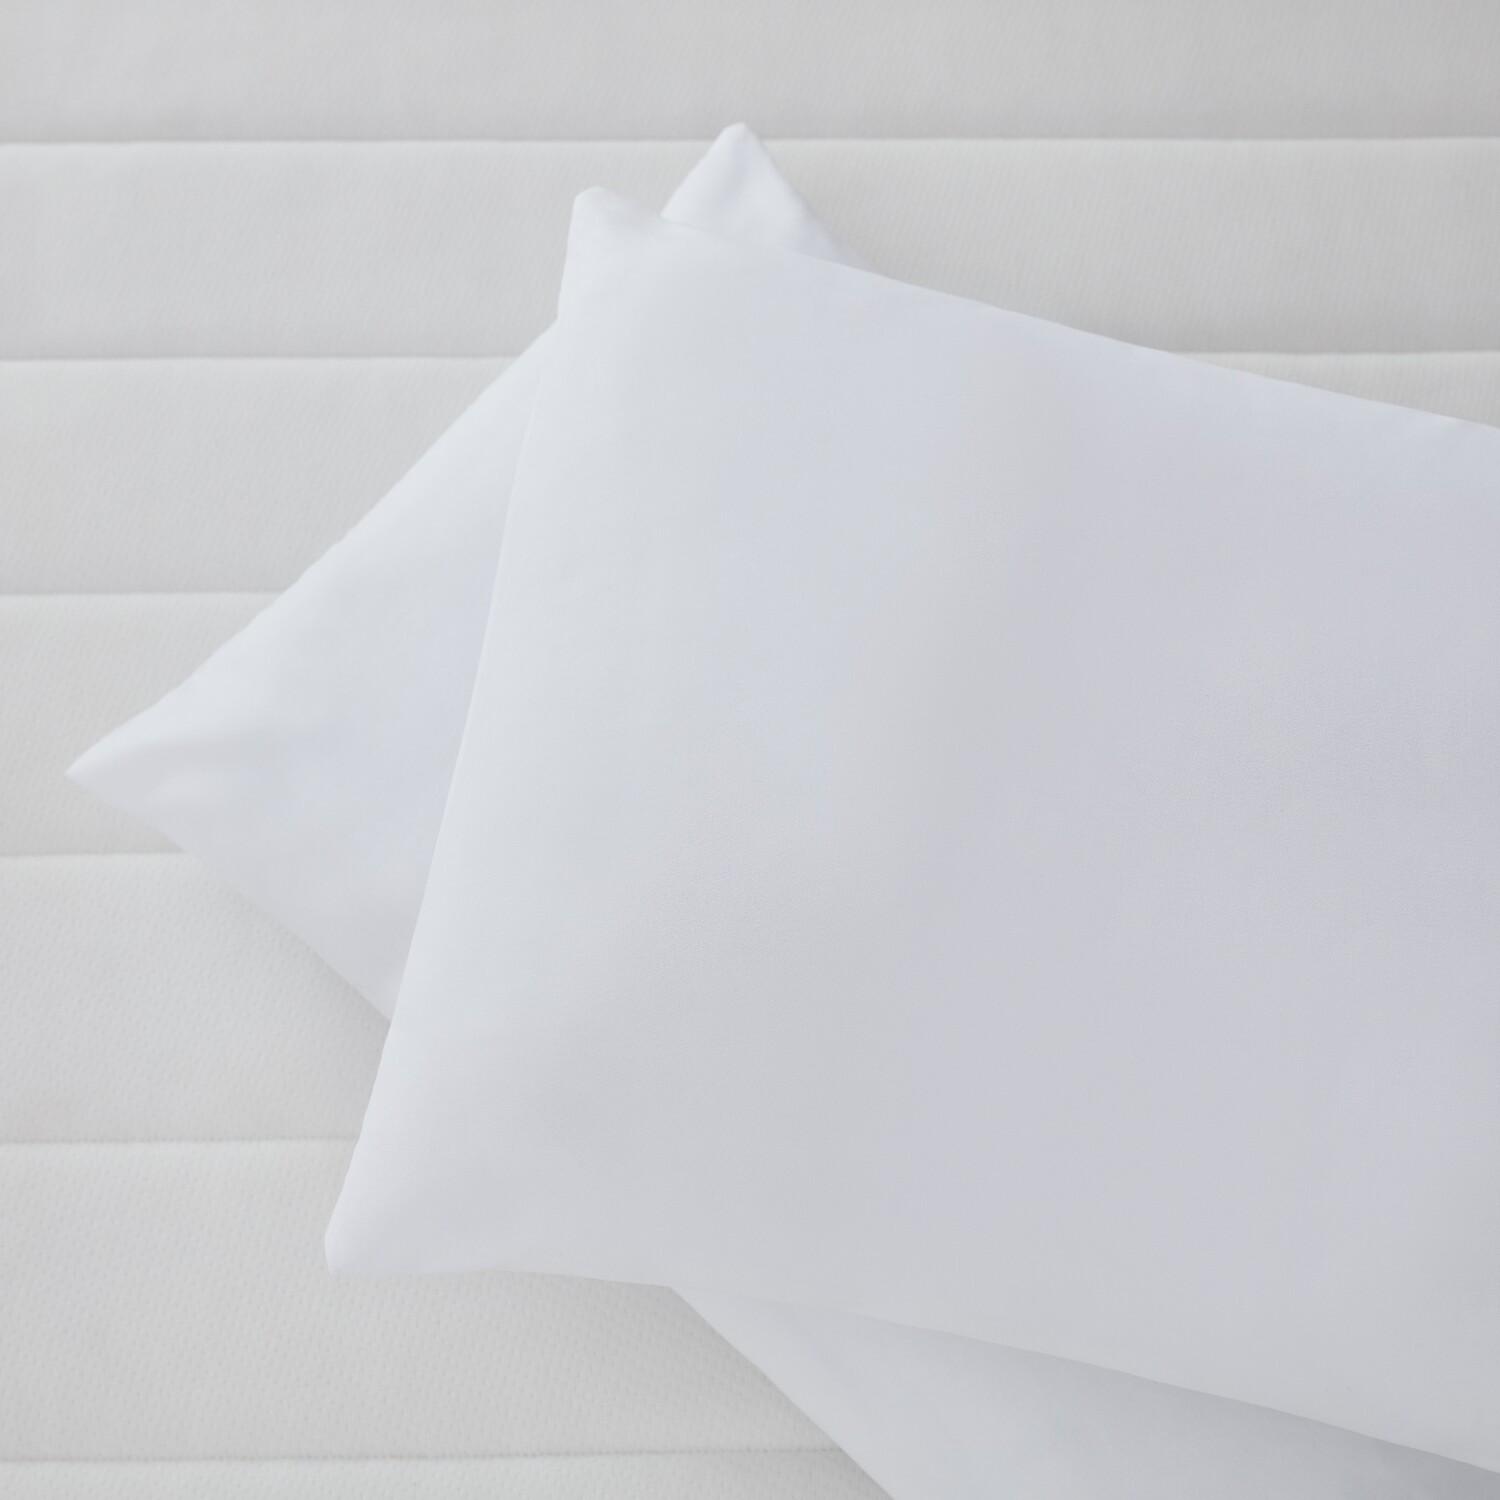 Silentnight White Hollowfibre Pillow 2 Pack Image 3